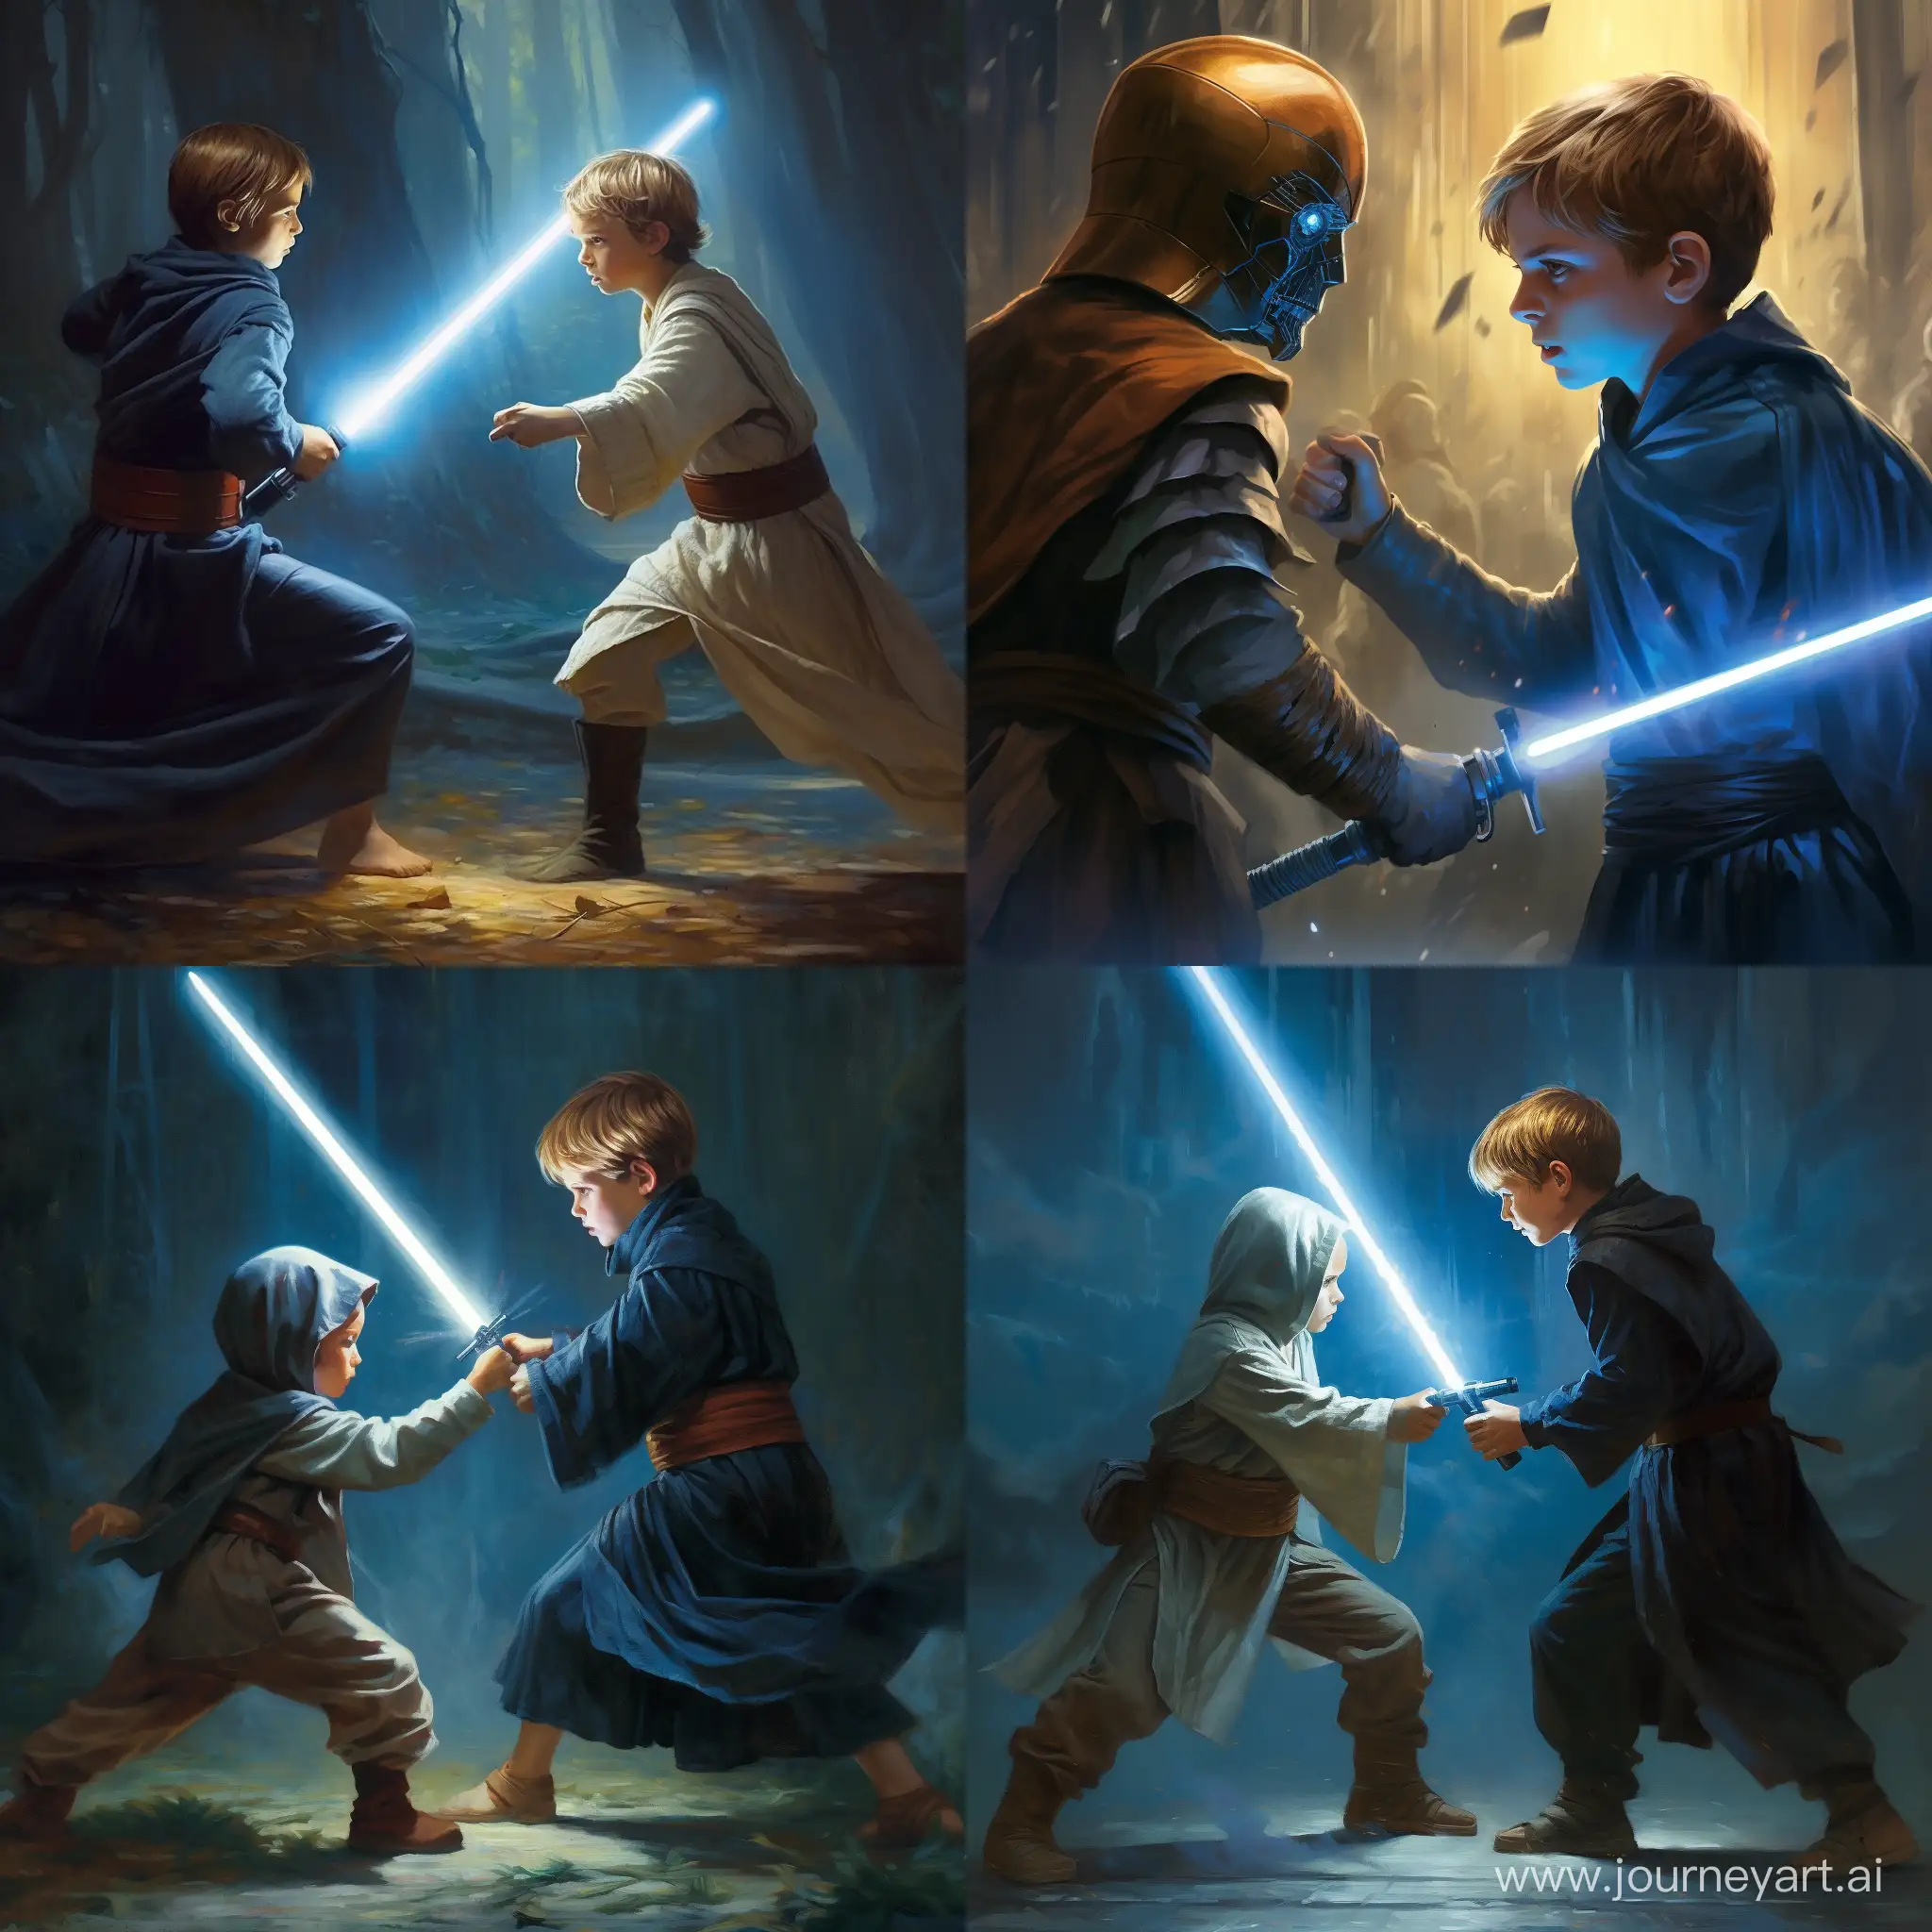 Epic-Duel-Young-Anakin-Skywalker-vs-ObiWan-Kenobi-with-Blue-Lightsabers